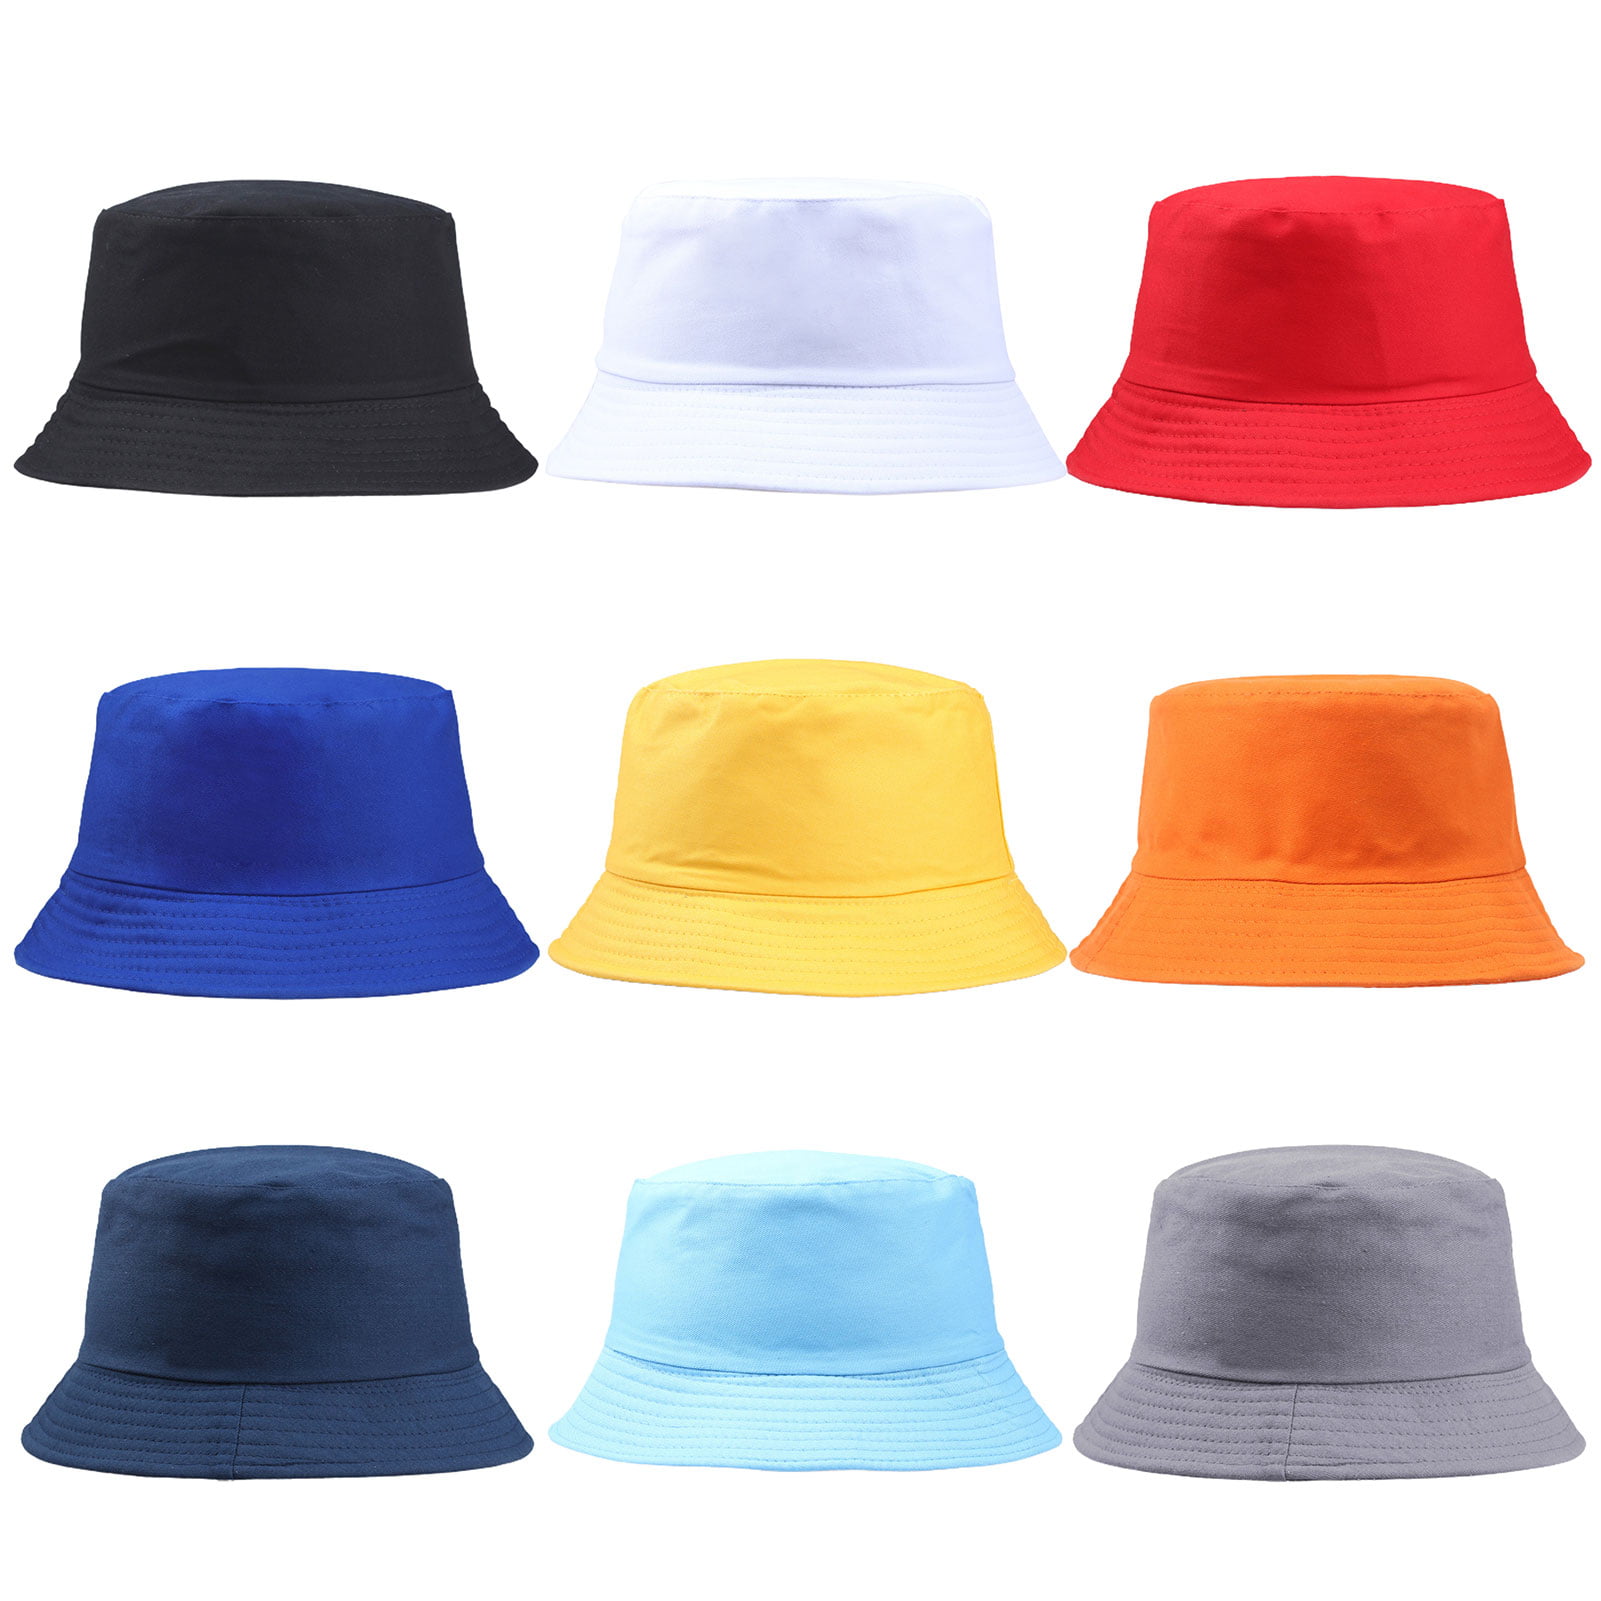 SANWOOD Bucket Solid Outdoor Hip Cotton Hop Color Hat Cap Sunshade Blue,Unisex Basin Beach Hat Navy Fisherman